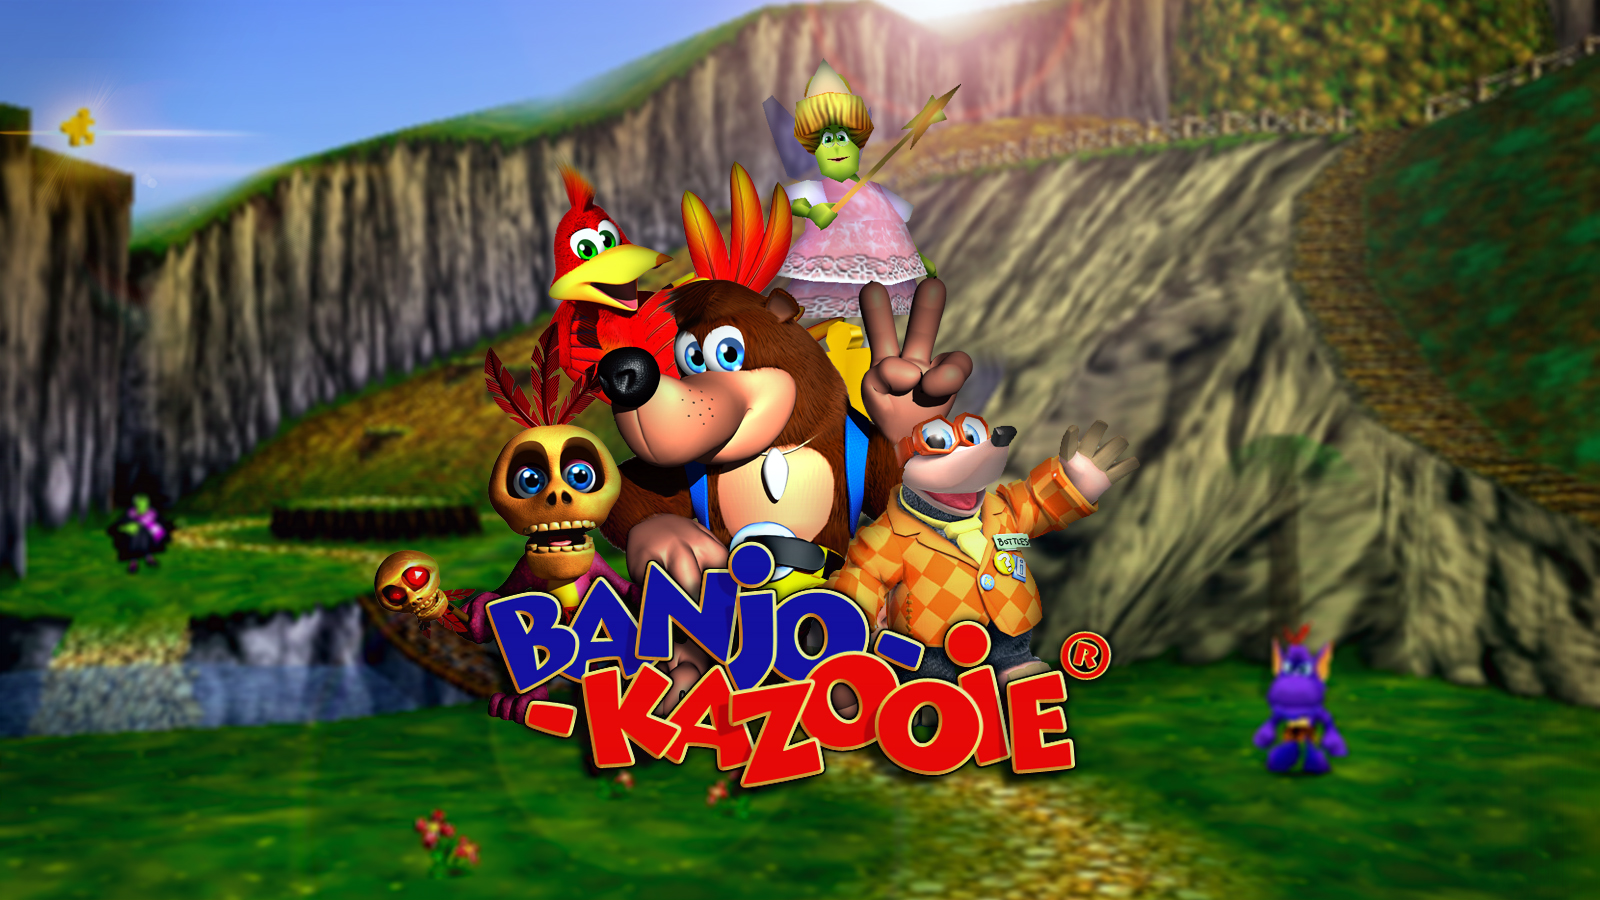 Banjo-Kazooie Returns Is A Fan-made Brand New Banjo Kazooie Game